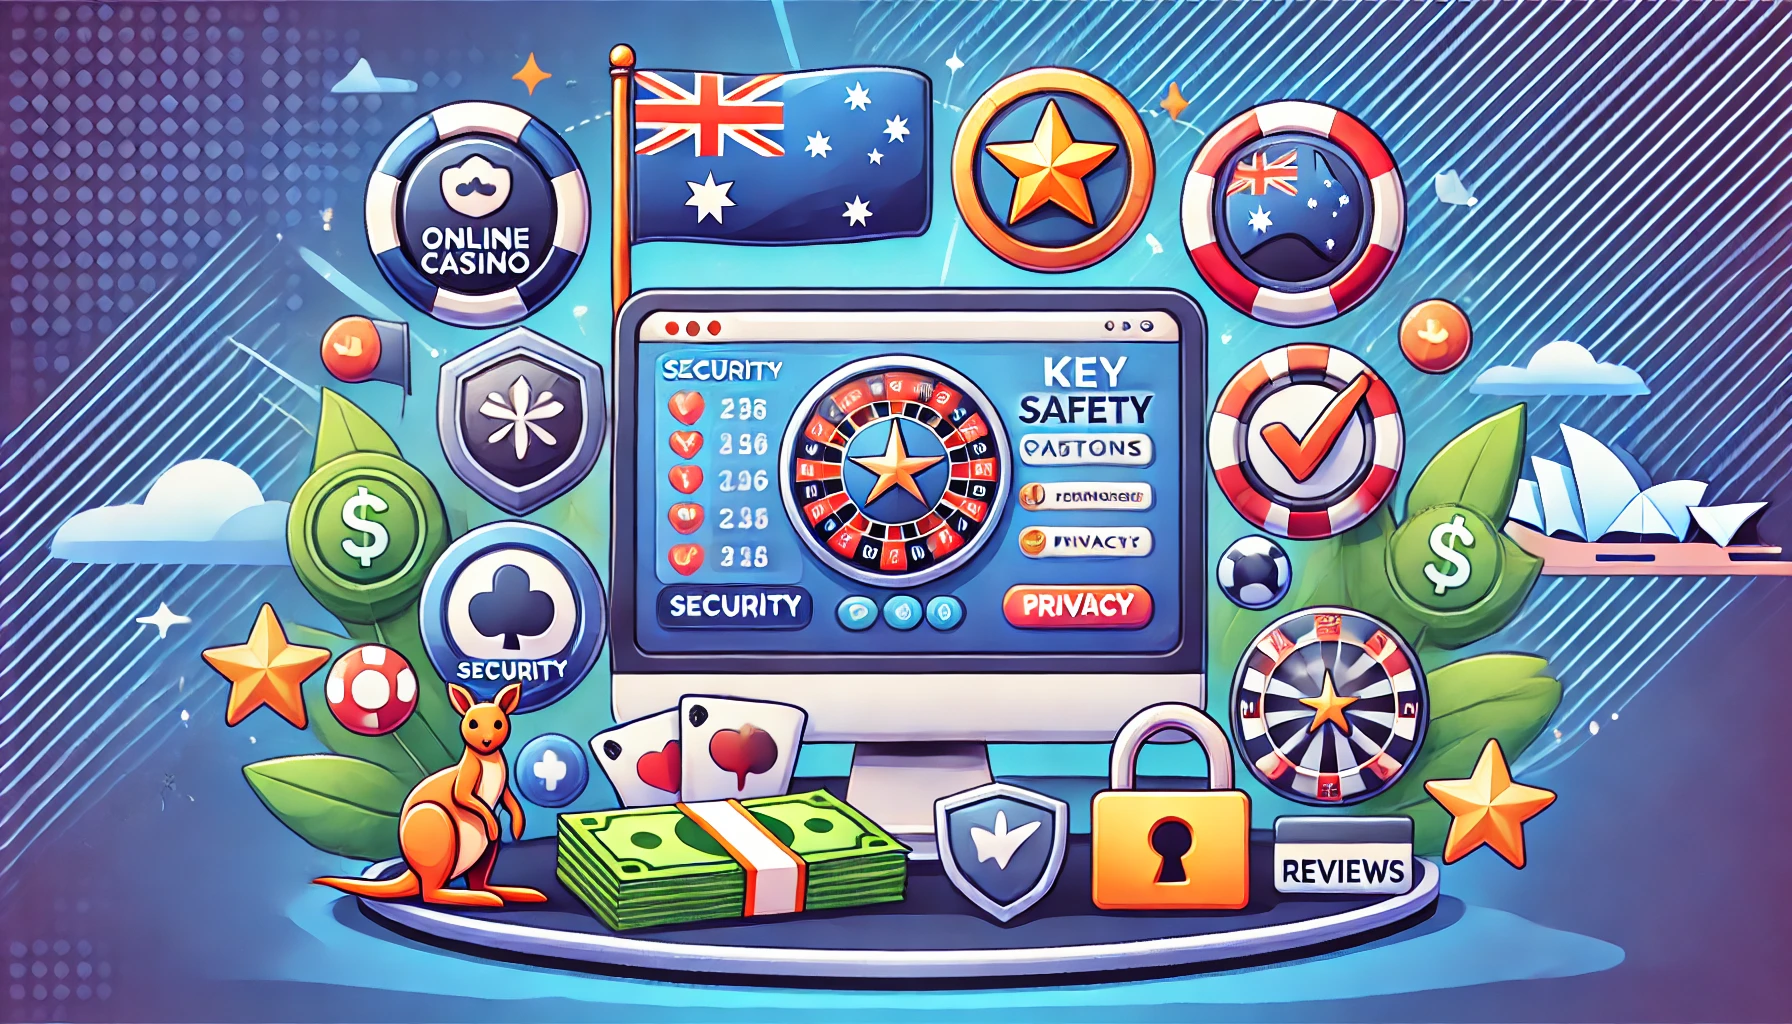 Safety First- Key Factors to Consider When Choosing an Australian Online Casino